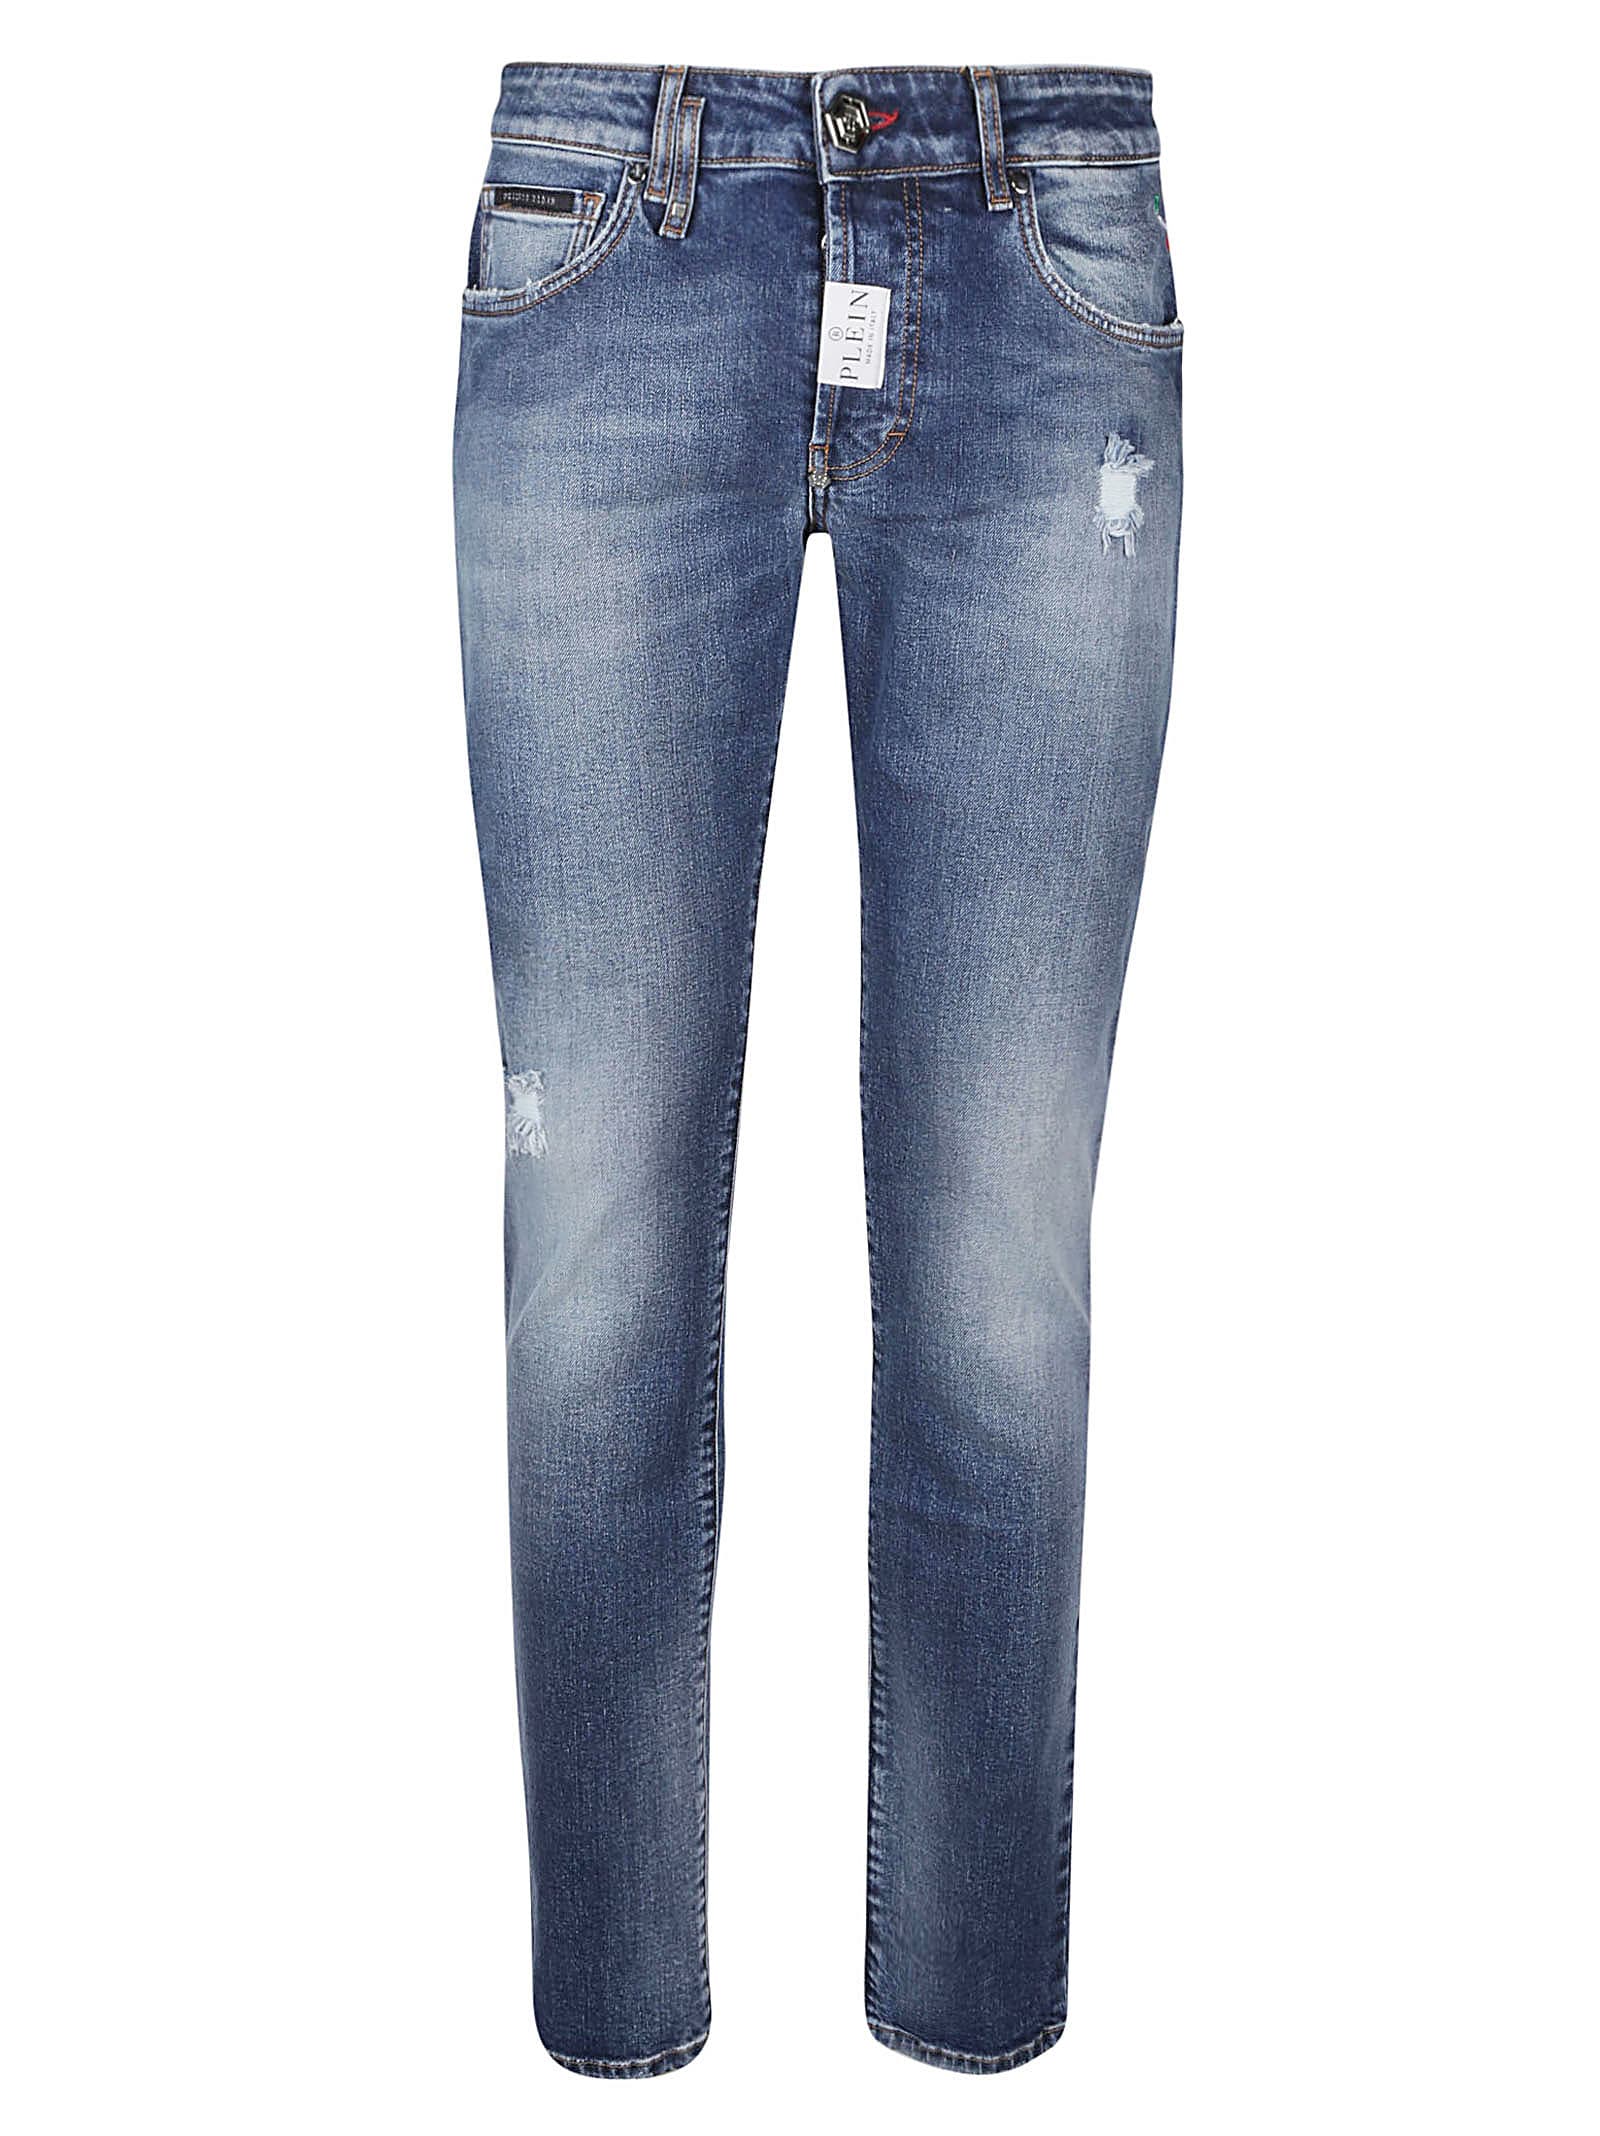 Philipp Plein Super Straight Cut Jeans In Bm Blue Marlin